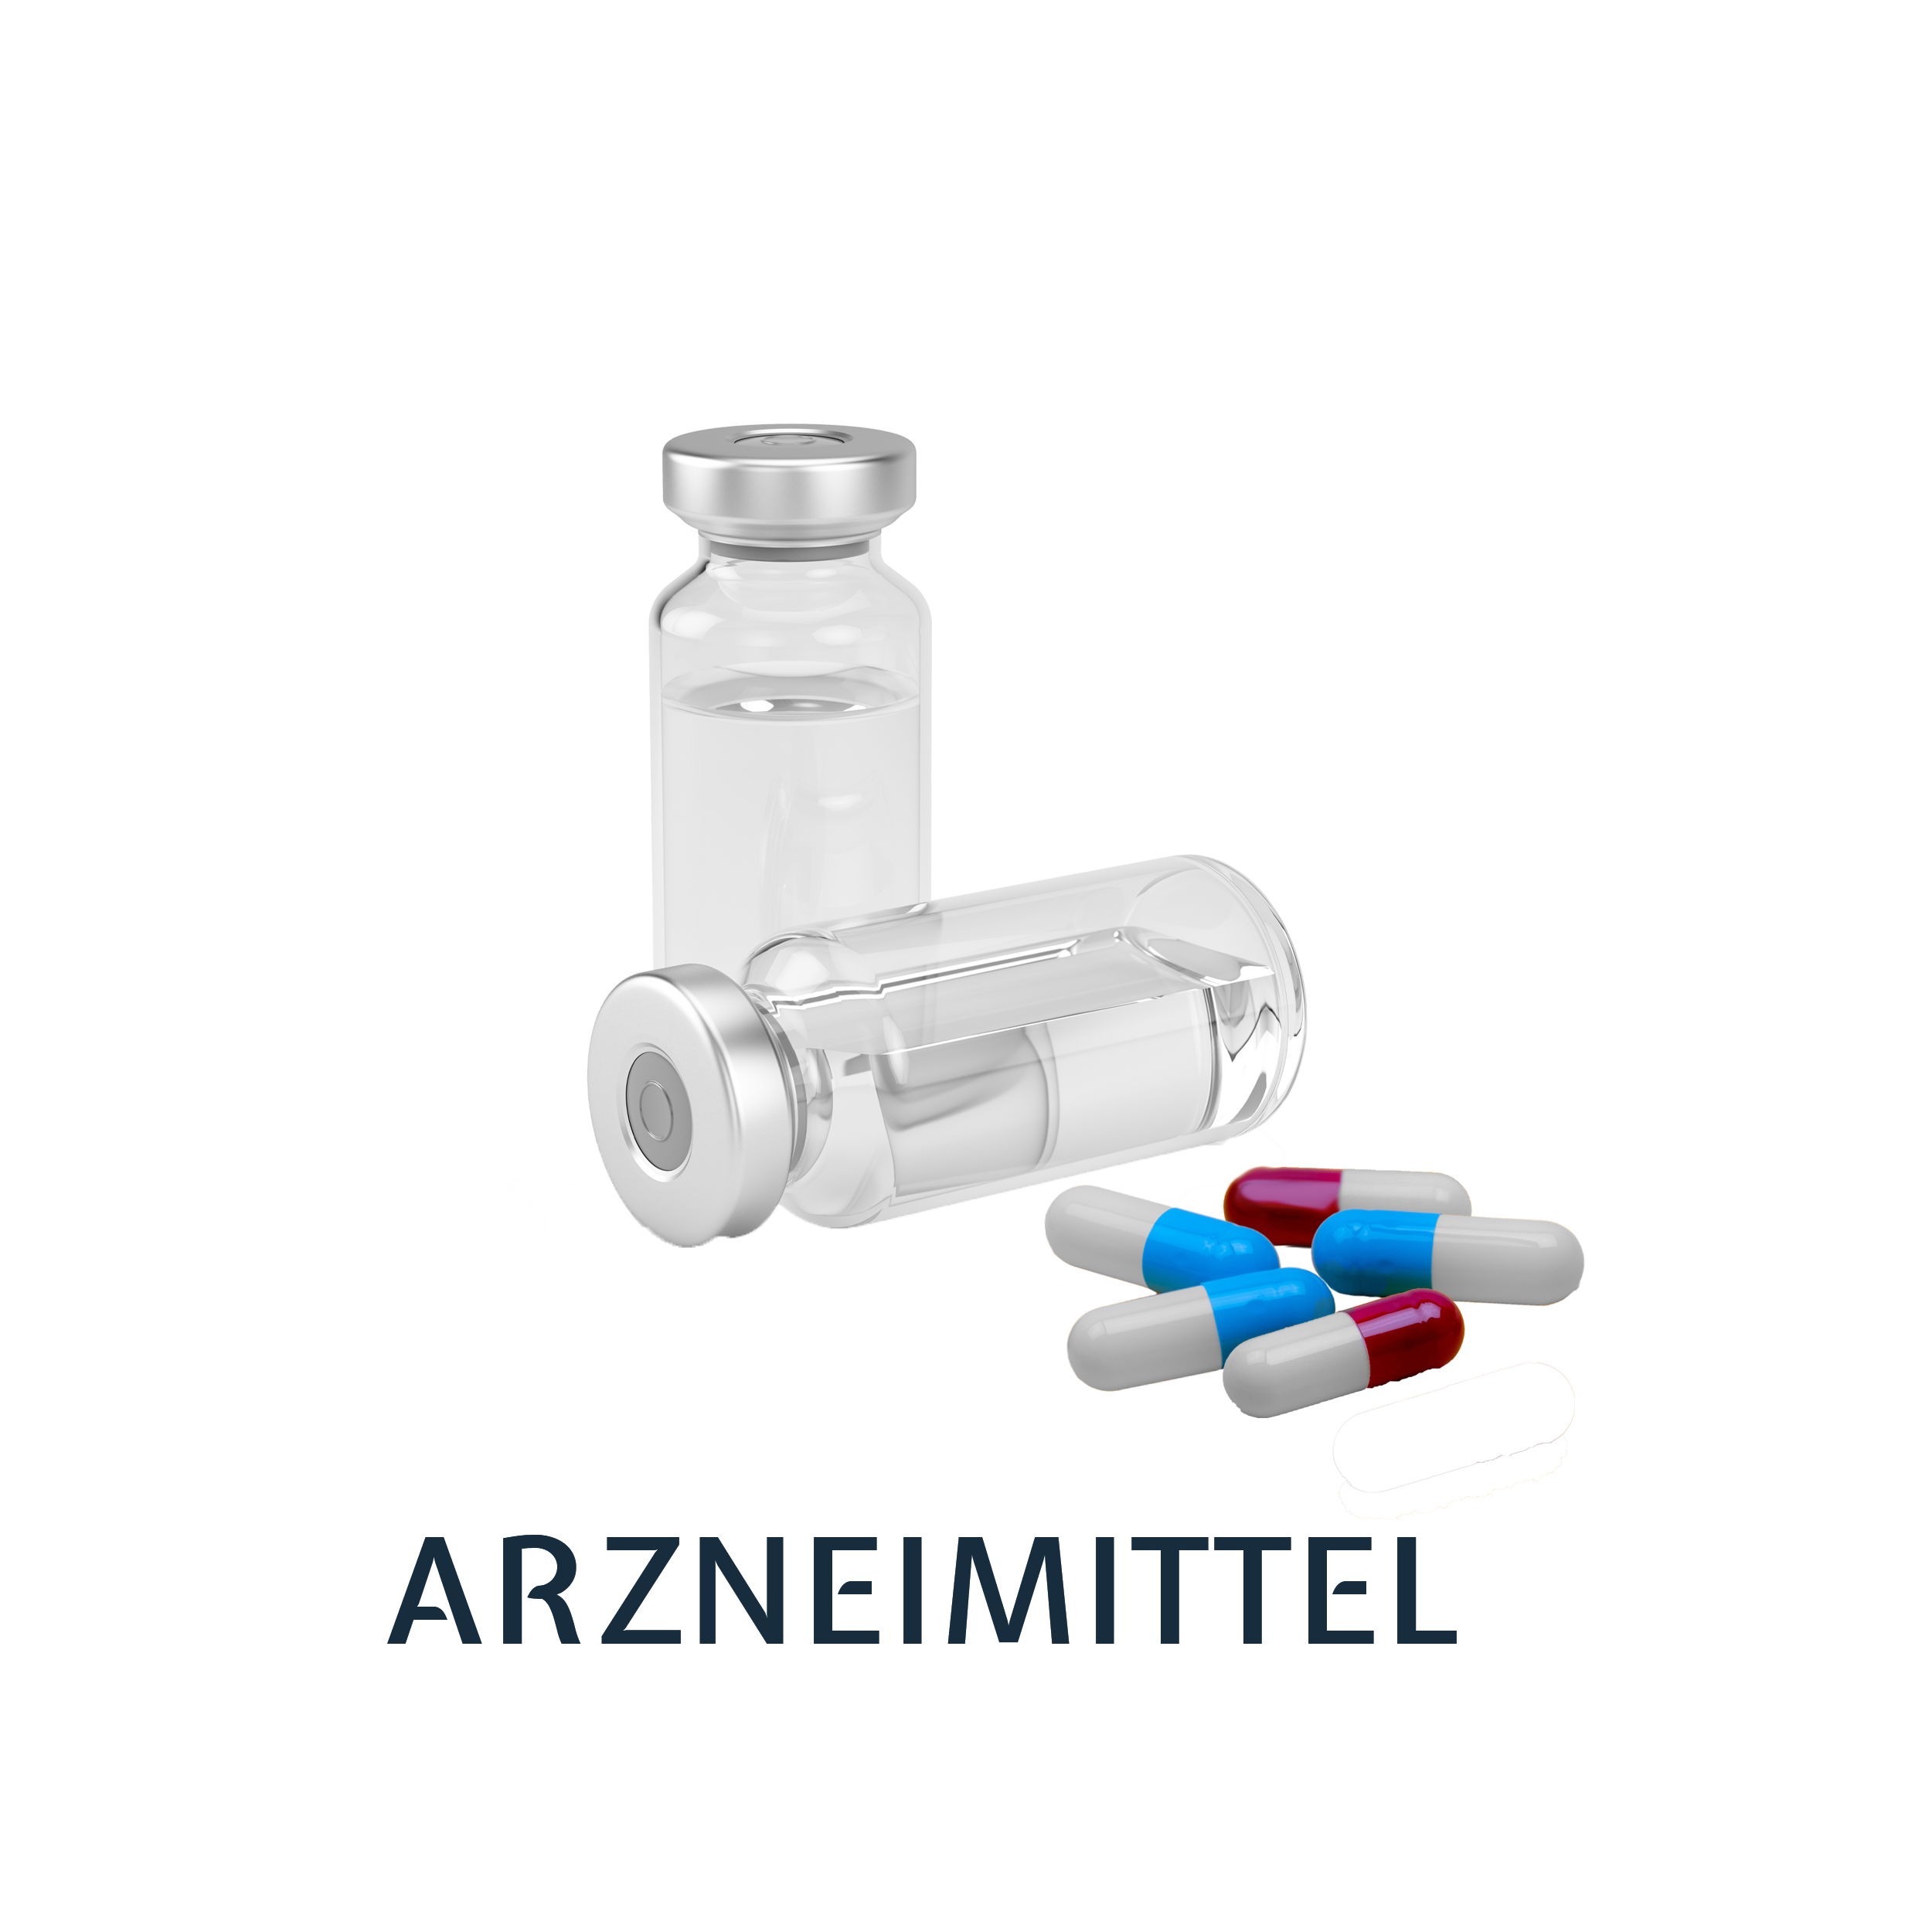 arzneimittel2_portfolio